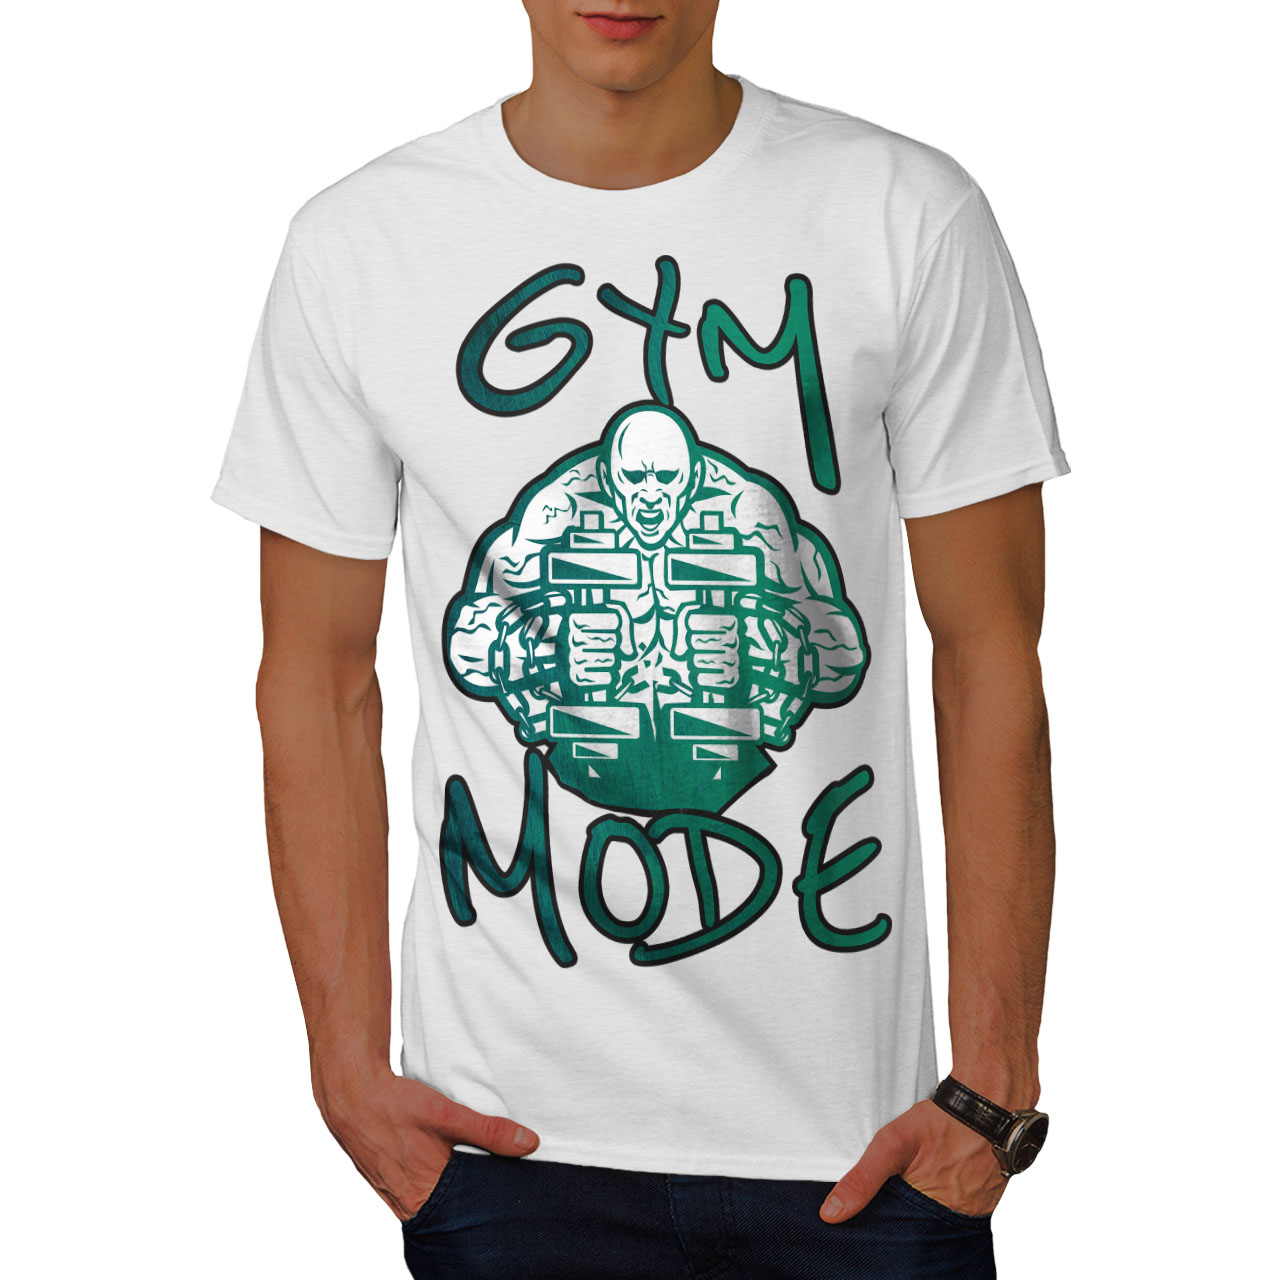 Download Wellcoda Gym Mode Workout Sport Mens T-shirt, Gym Graphic Design Printed Tee | eBay